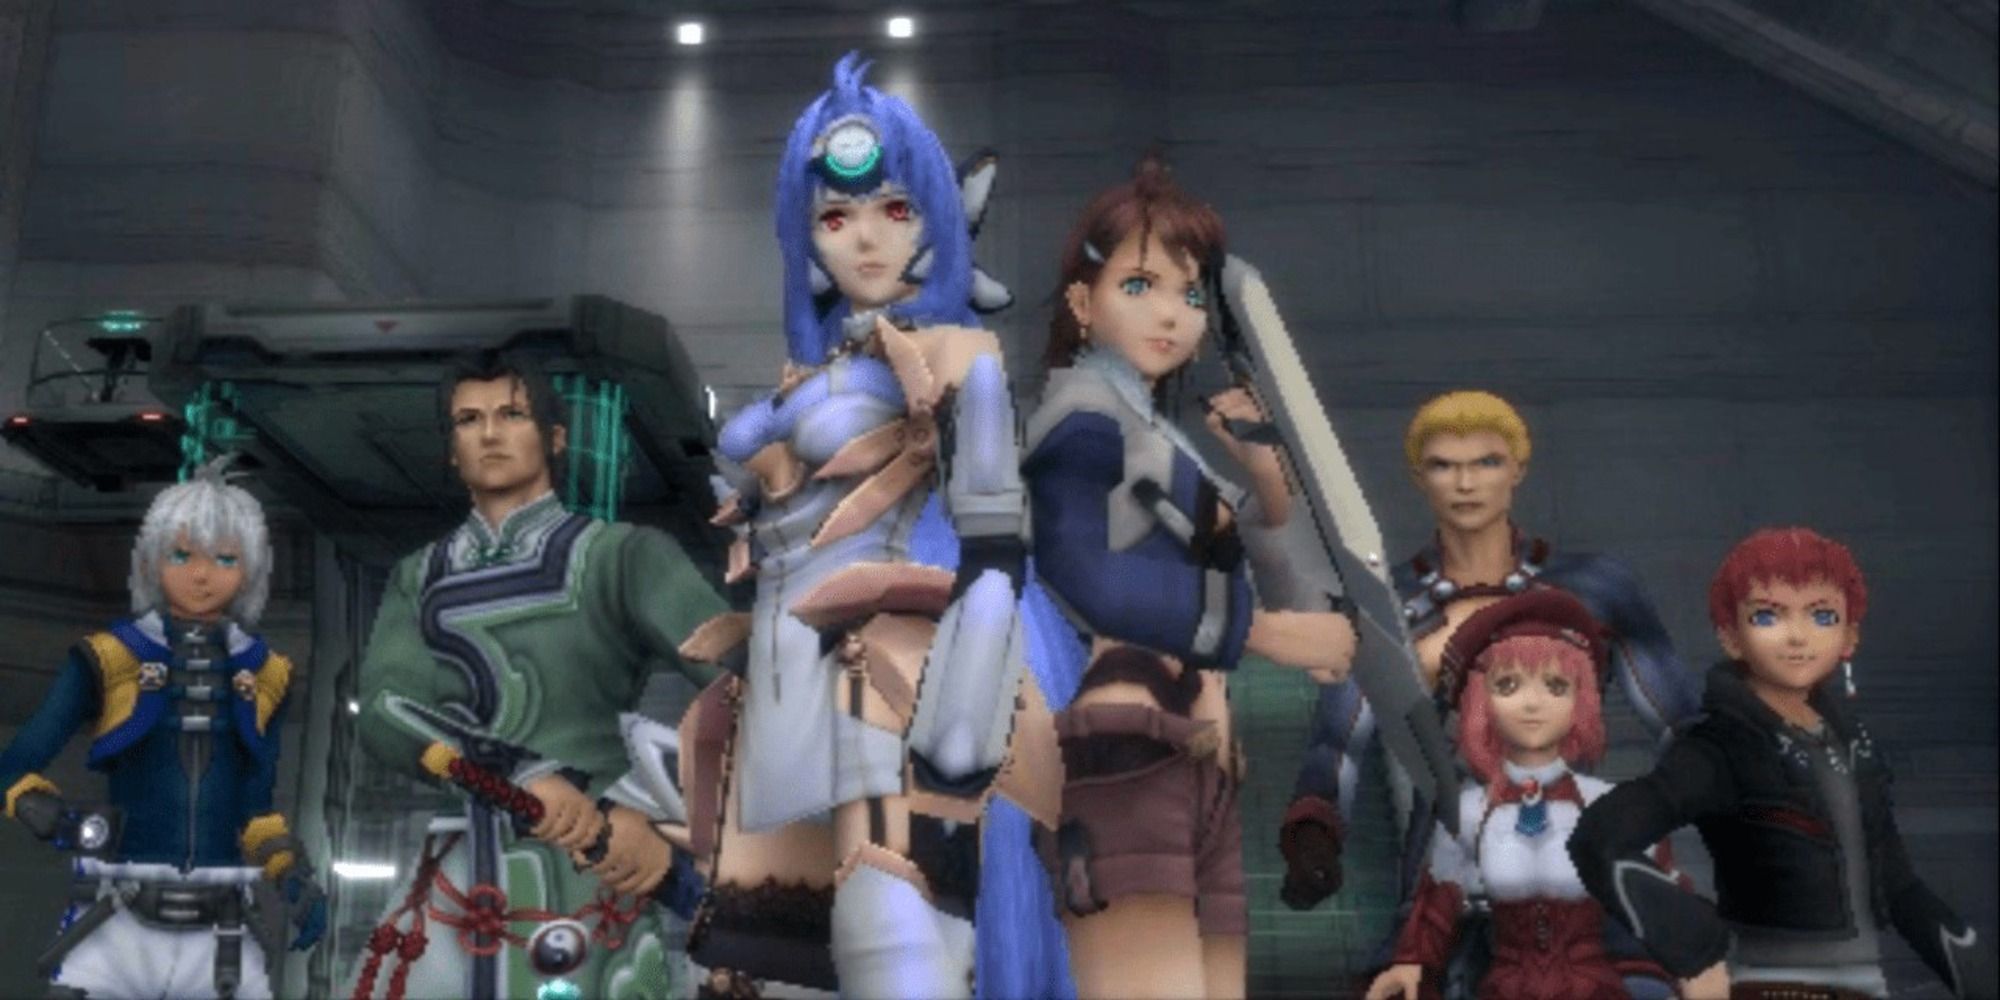 Xenosaga 3 cutscene showing the main party members chaos, Jin, KOS-MOS, Shion, Ziggy, MOMO, and Jr